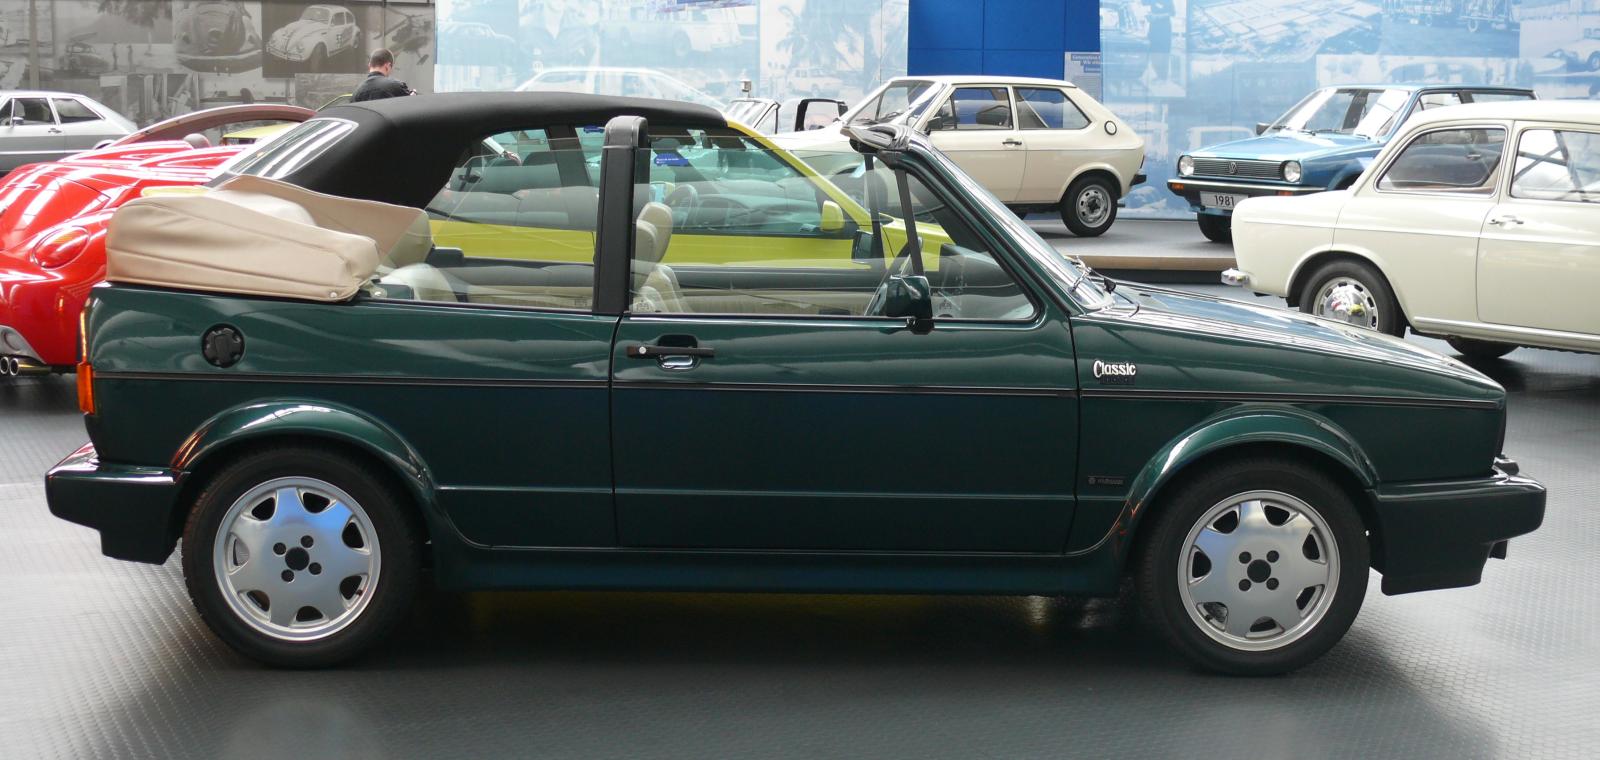 VW Volkswagen Golf Cabriolet Classic Line 1991 green r | Flickr ...